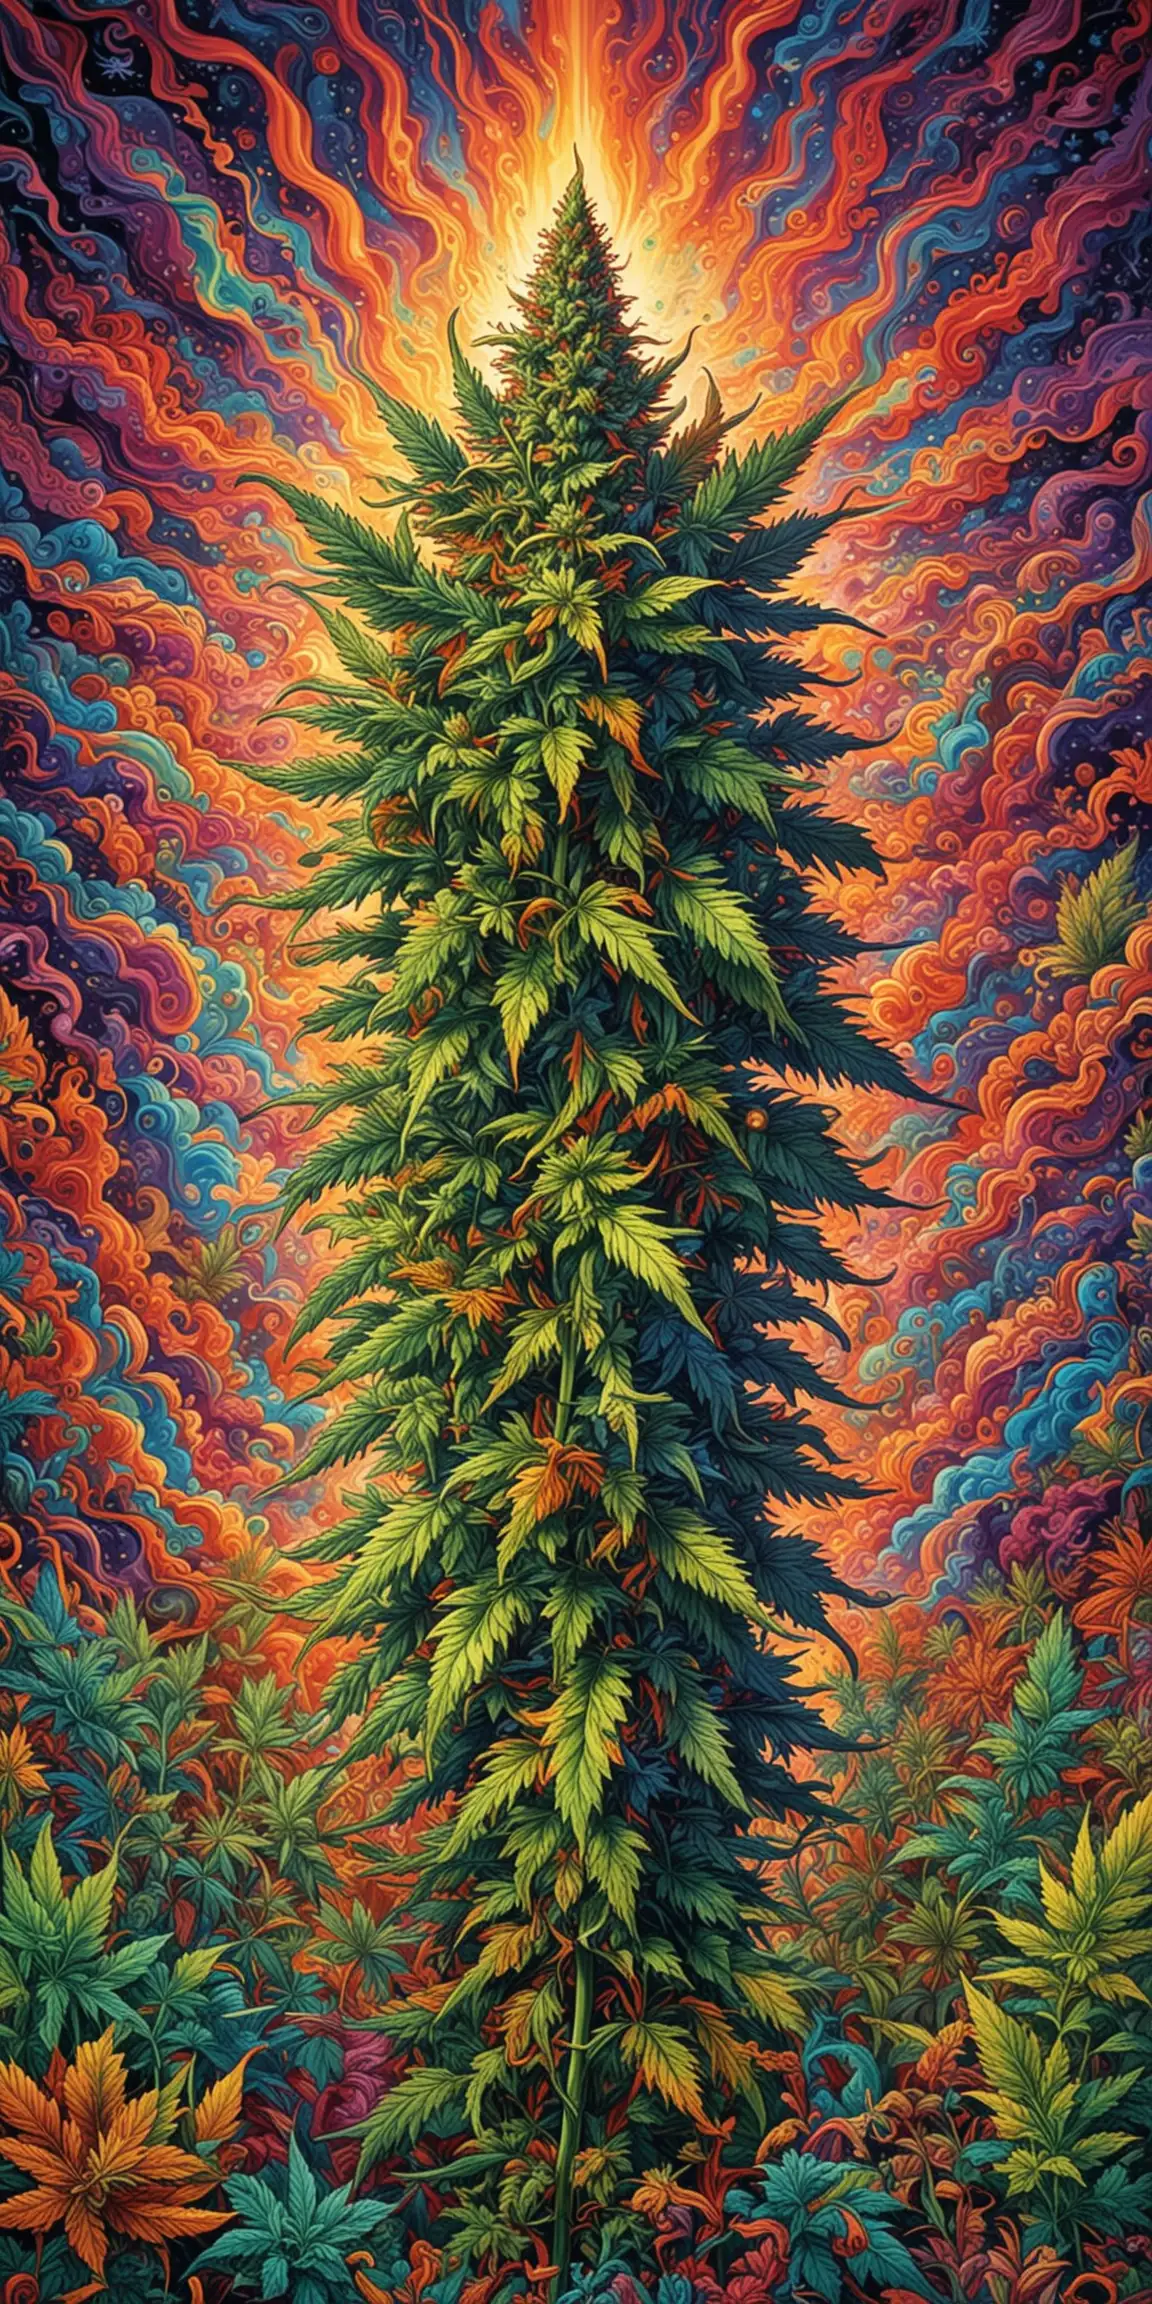 Psychedelic OG Cannabis Art Vibrant Hallucinatory Illustration